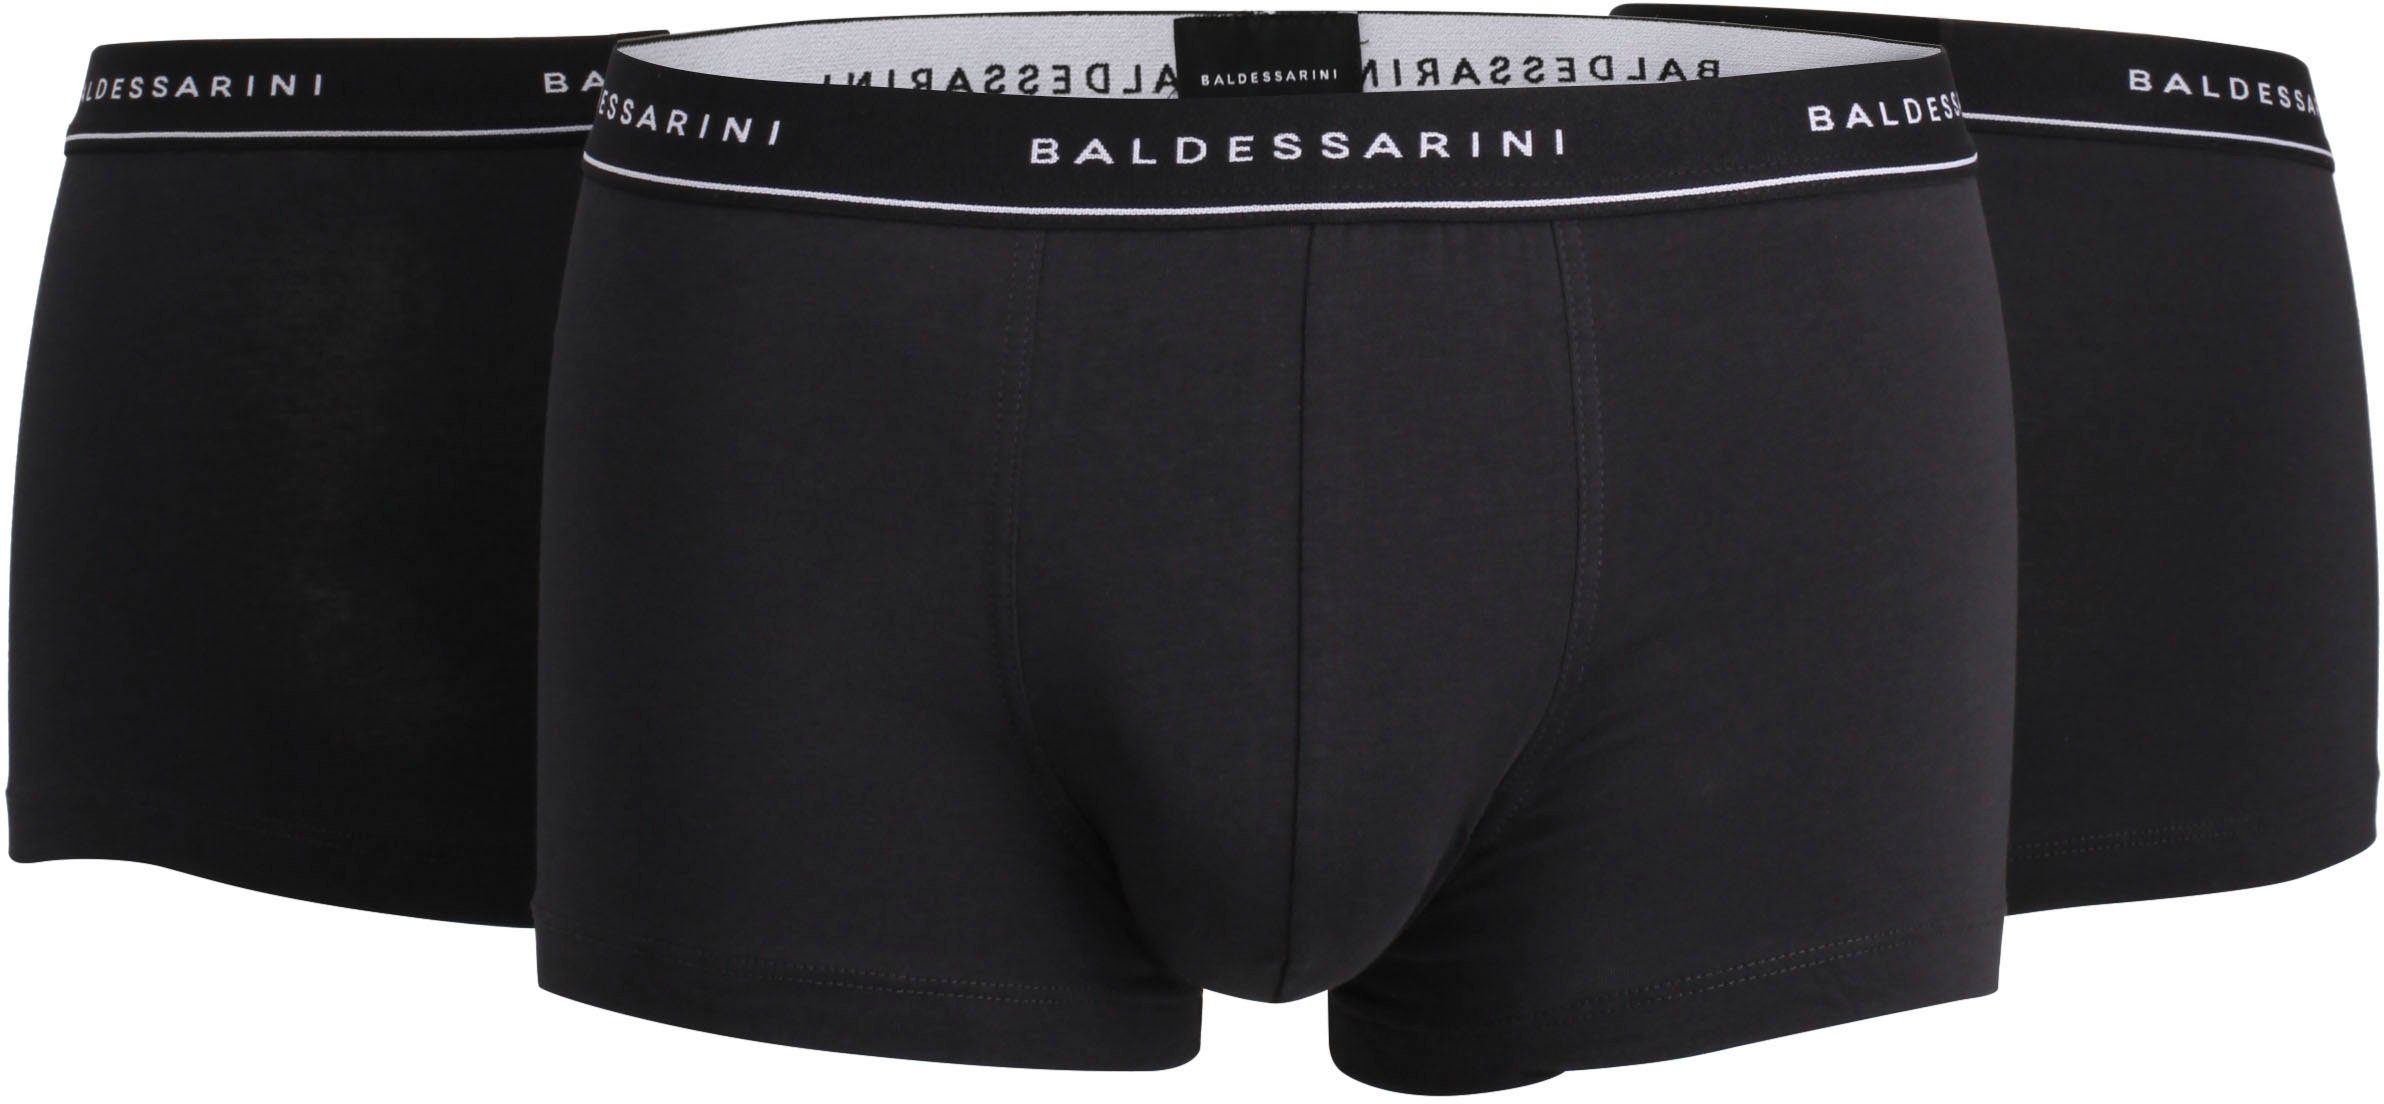 Short Pants BALDESSARINI Pac schwarz-dunkel-uni Pants 3er Retro